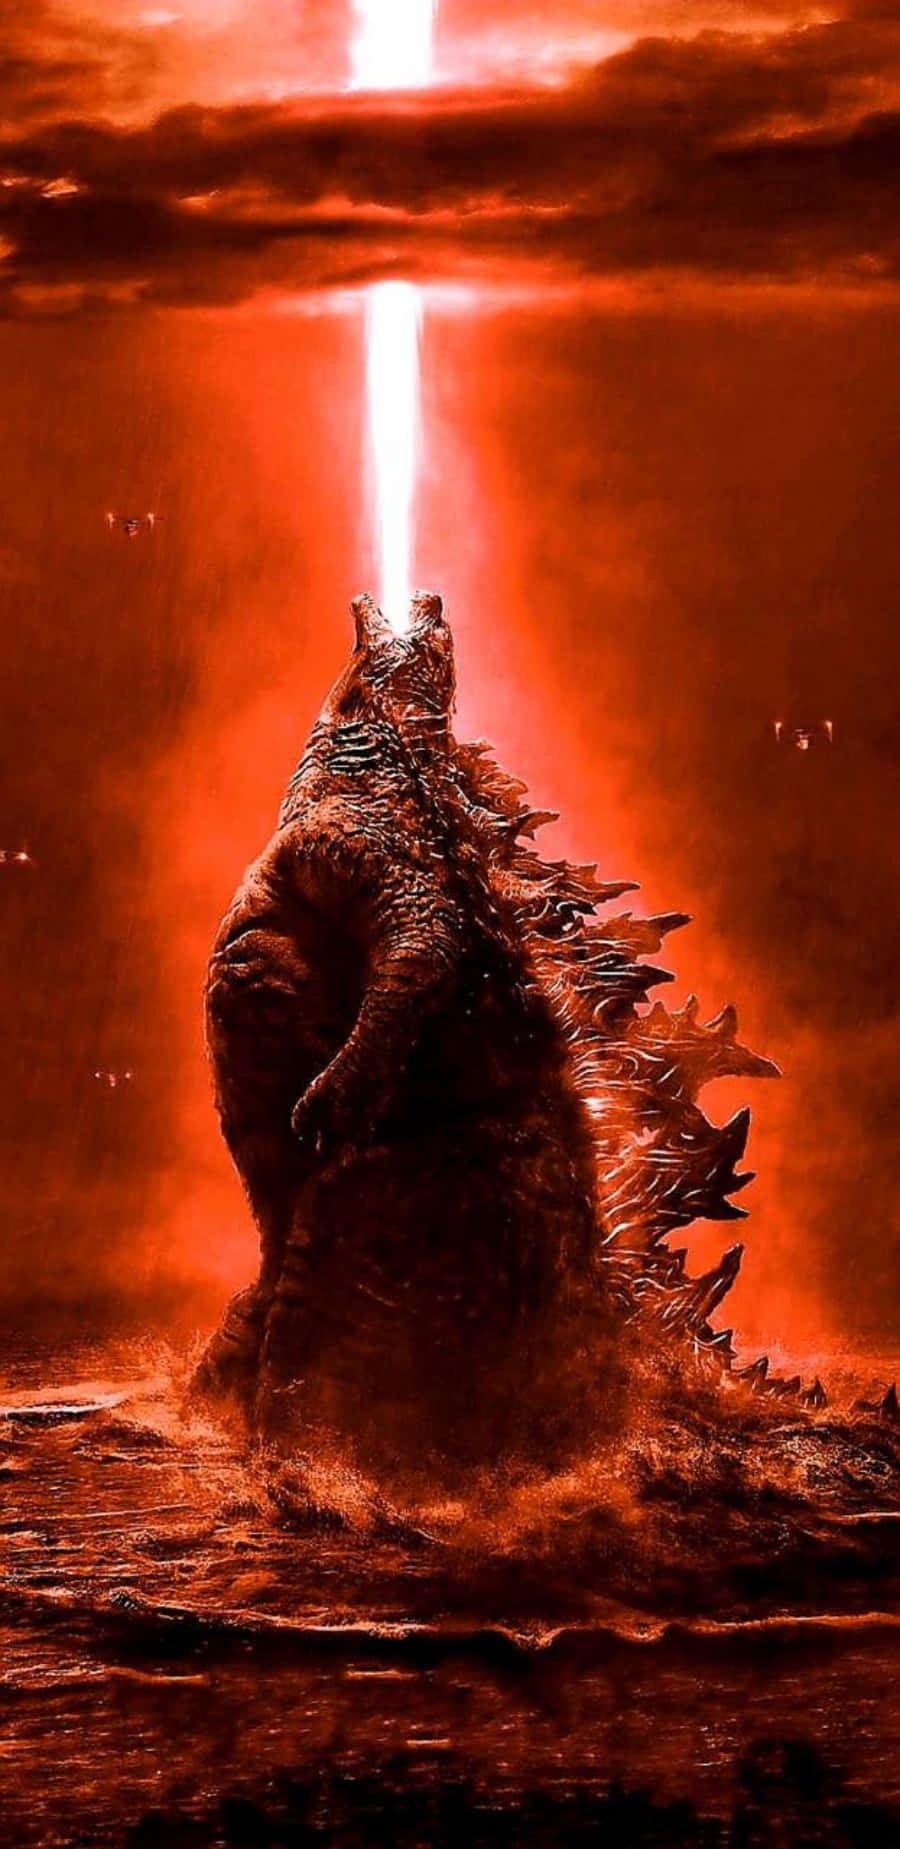 Imagende Godzilla Disparando Un Rayo Láser Rojo.